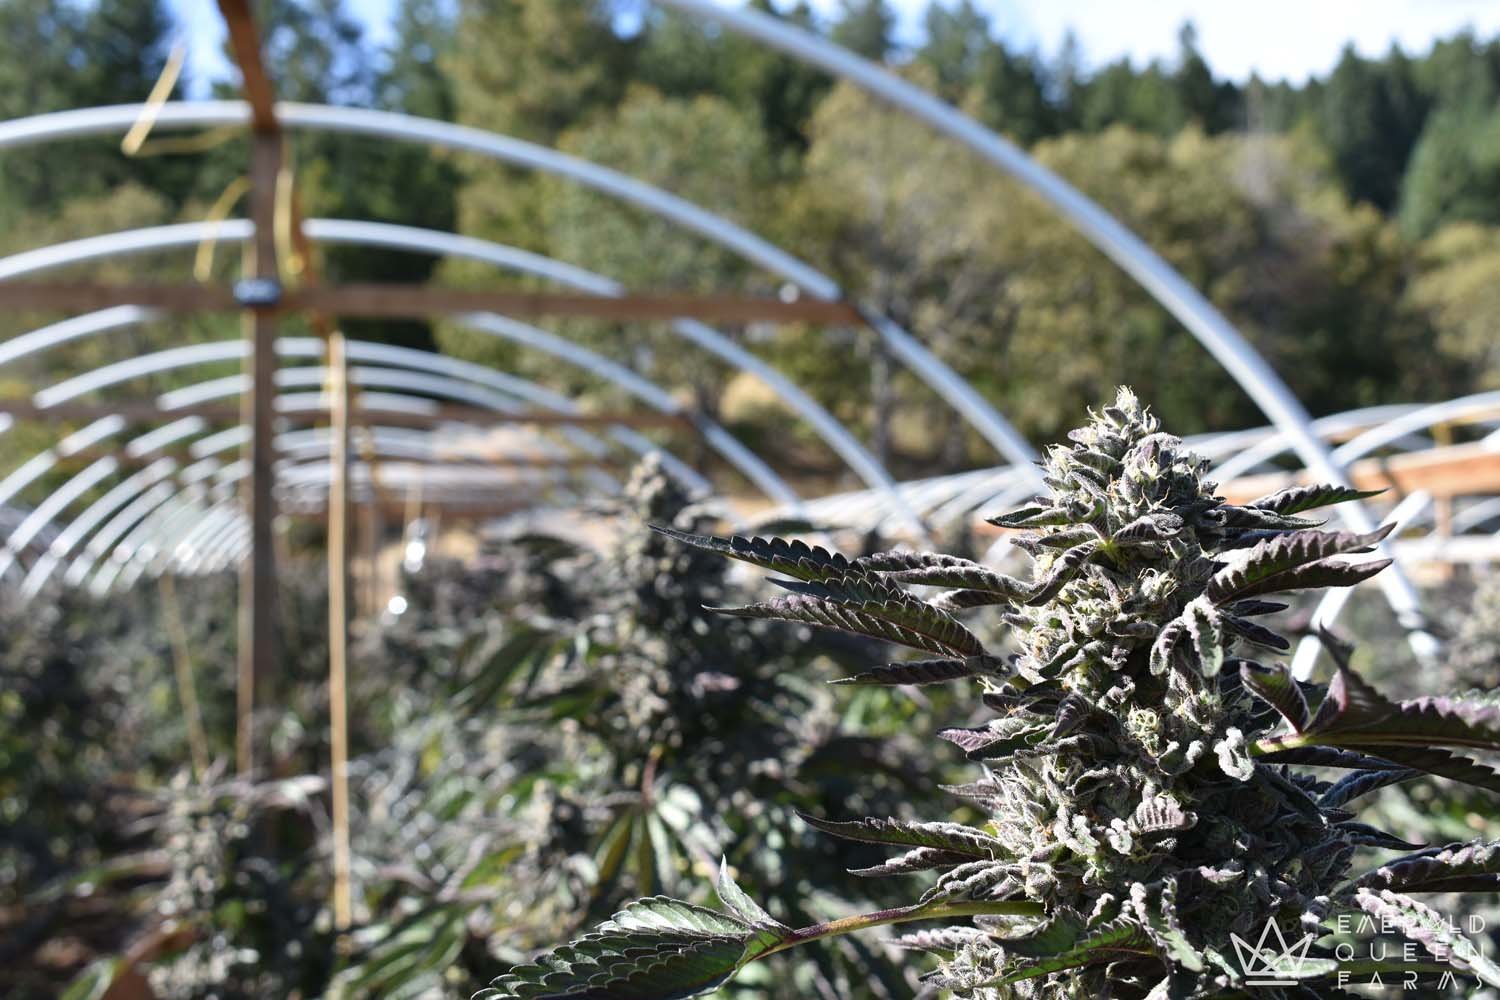 emerald-queen-farms-cannabis-flowers-hoops.jpg